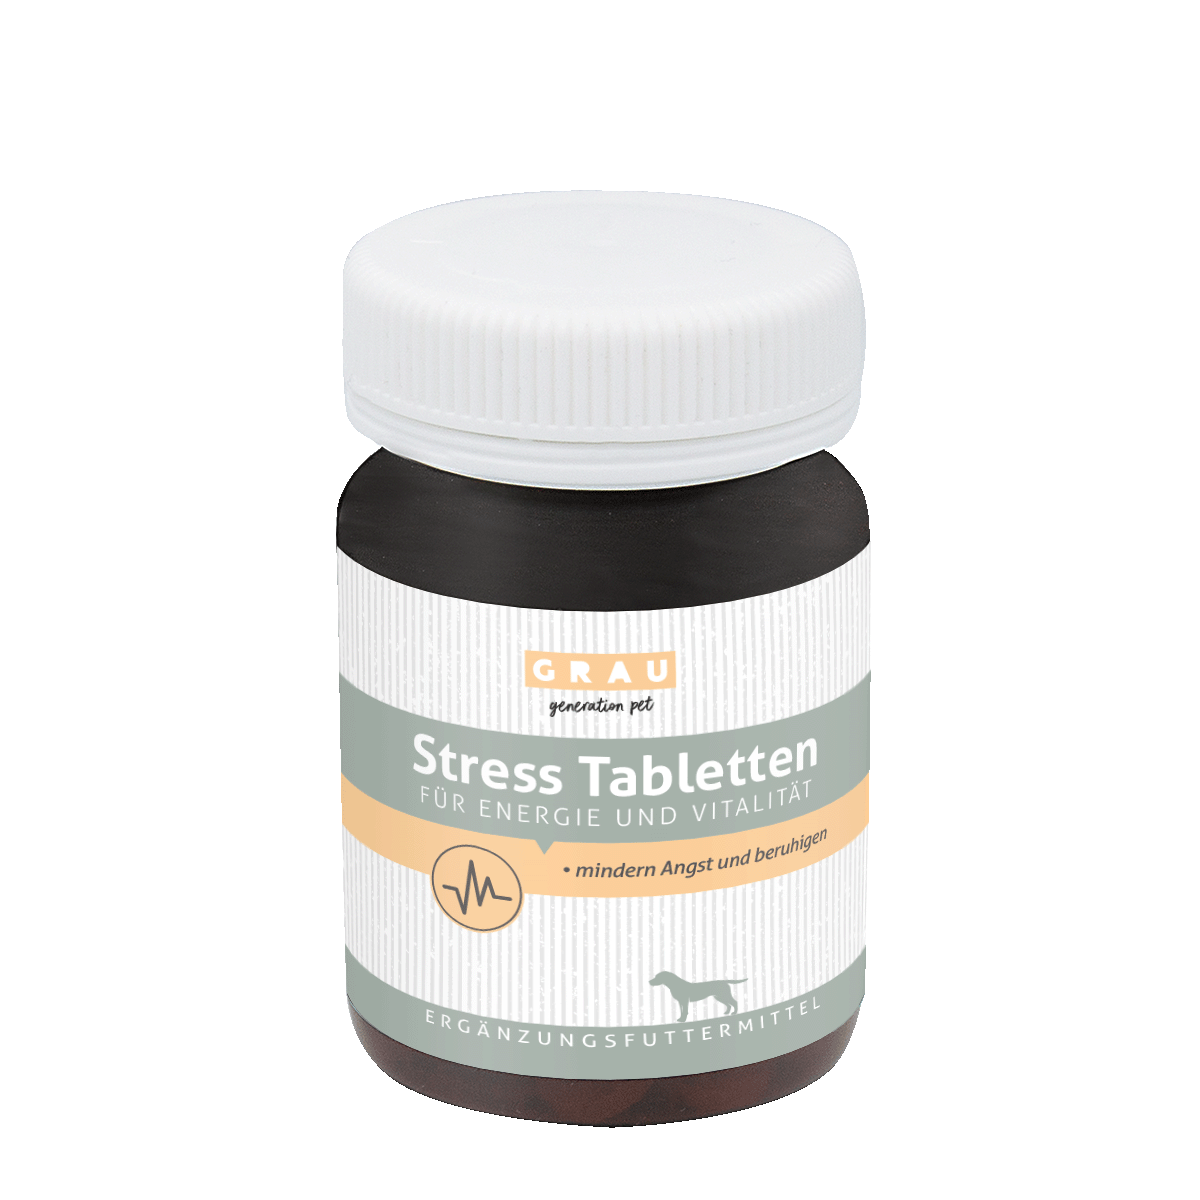 Stress Tabletten